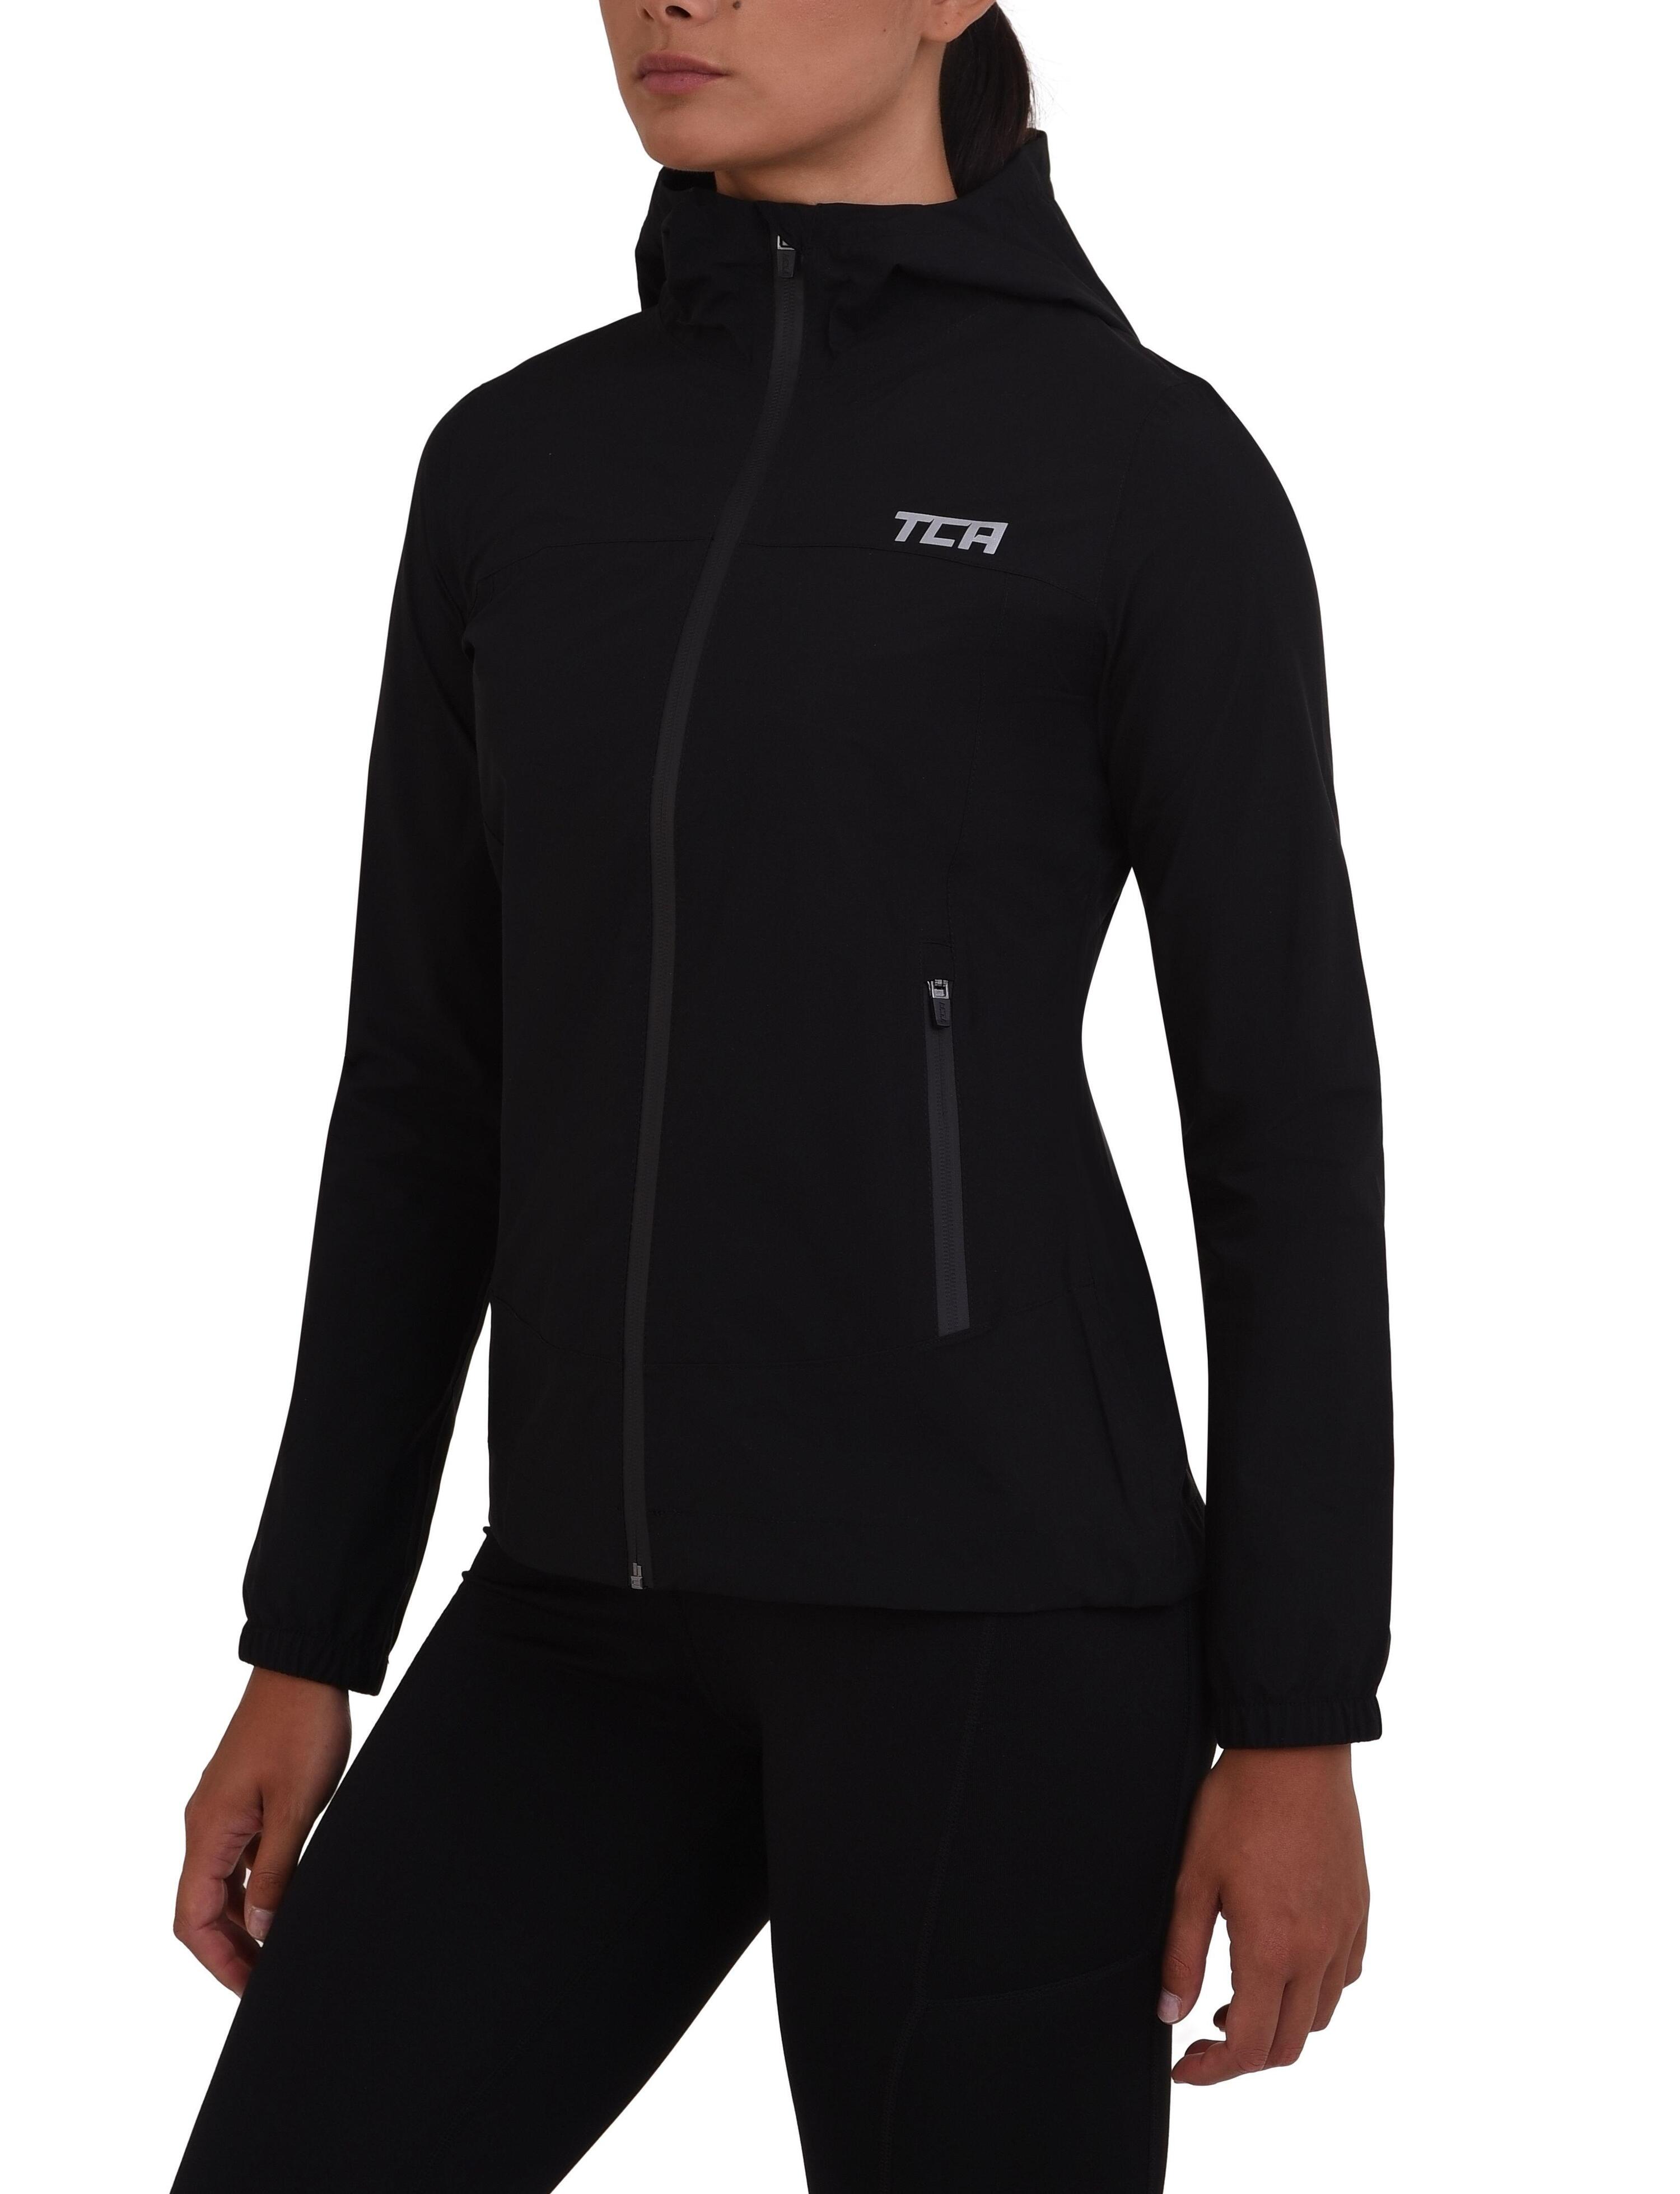 Women's AirLite Rain Jacket with Zip Pockets - Black 1/4